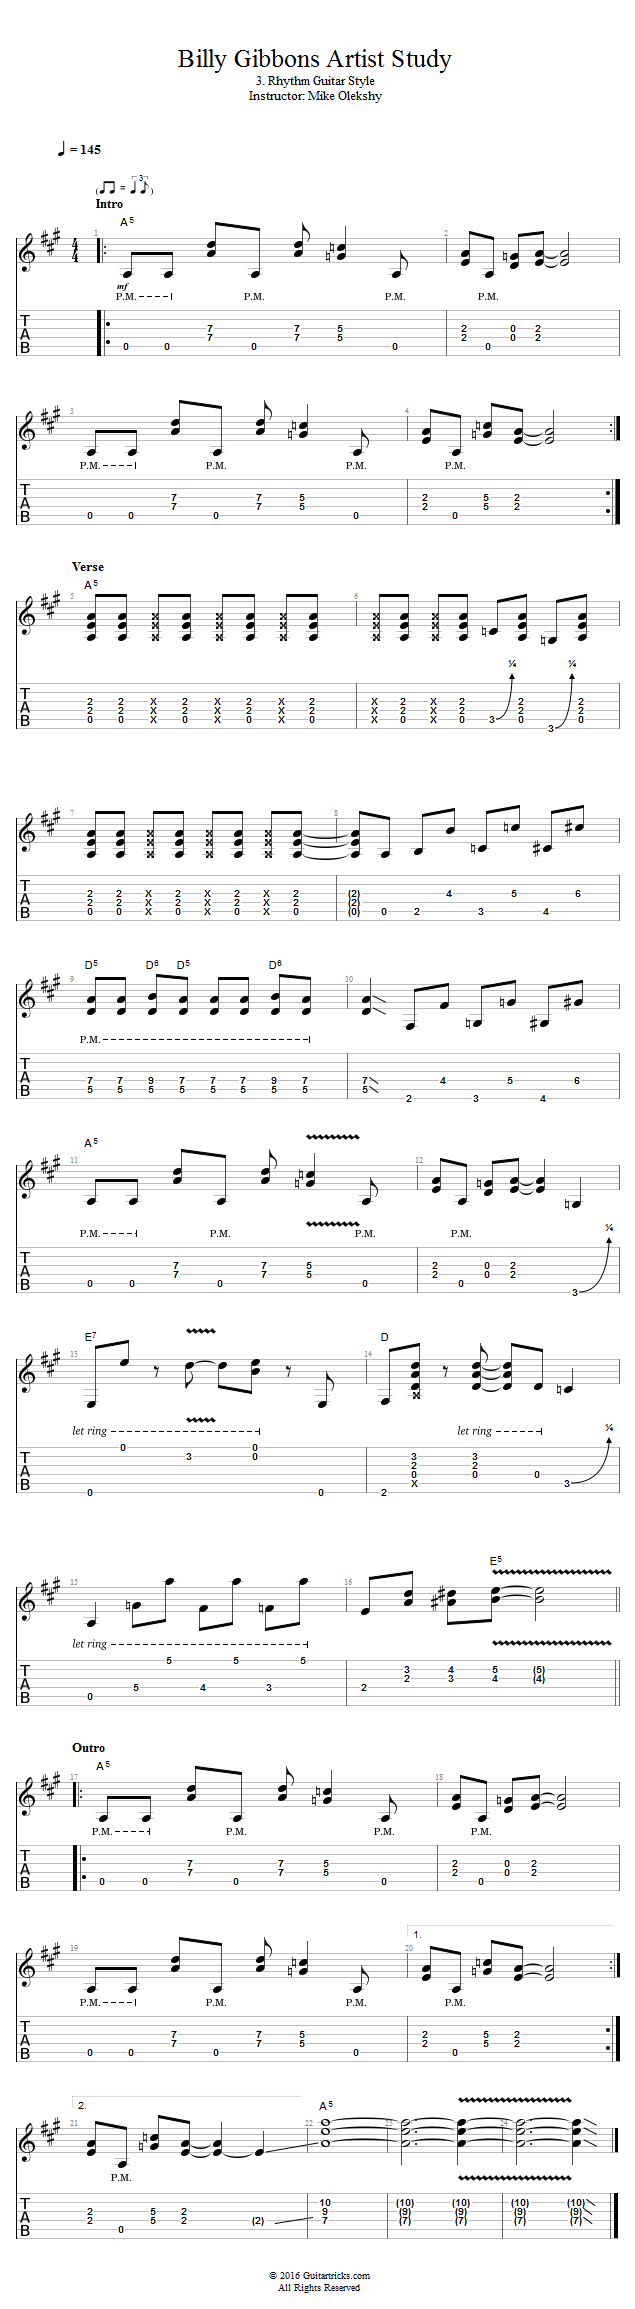 Rhythm Guitar Style song notation